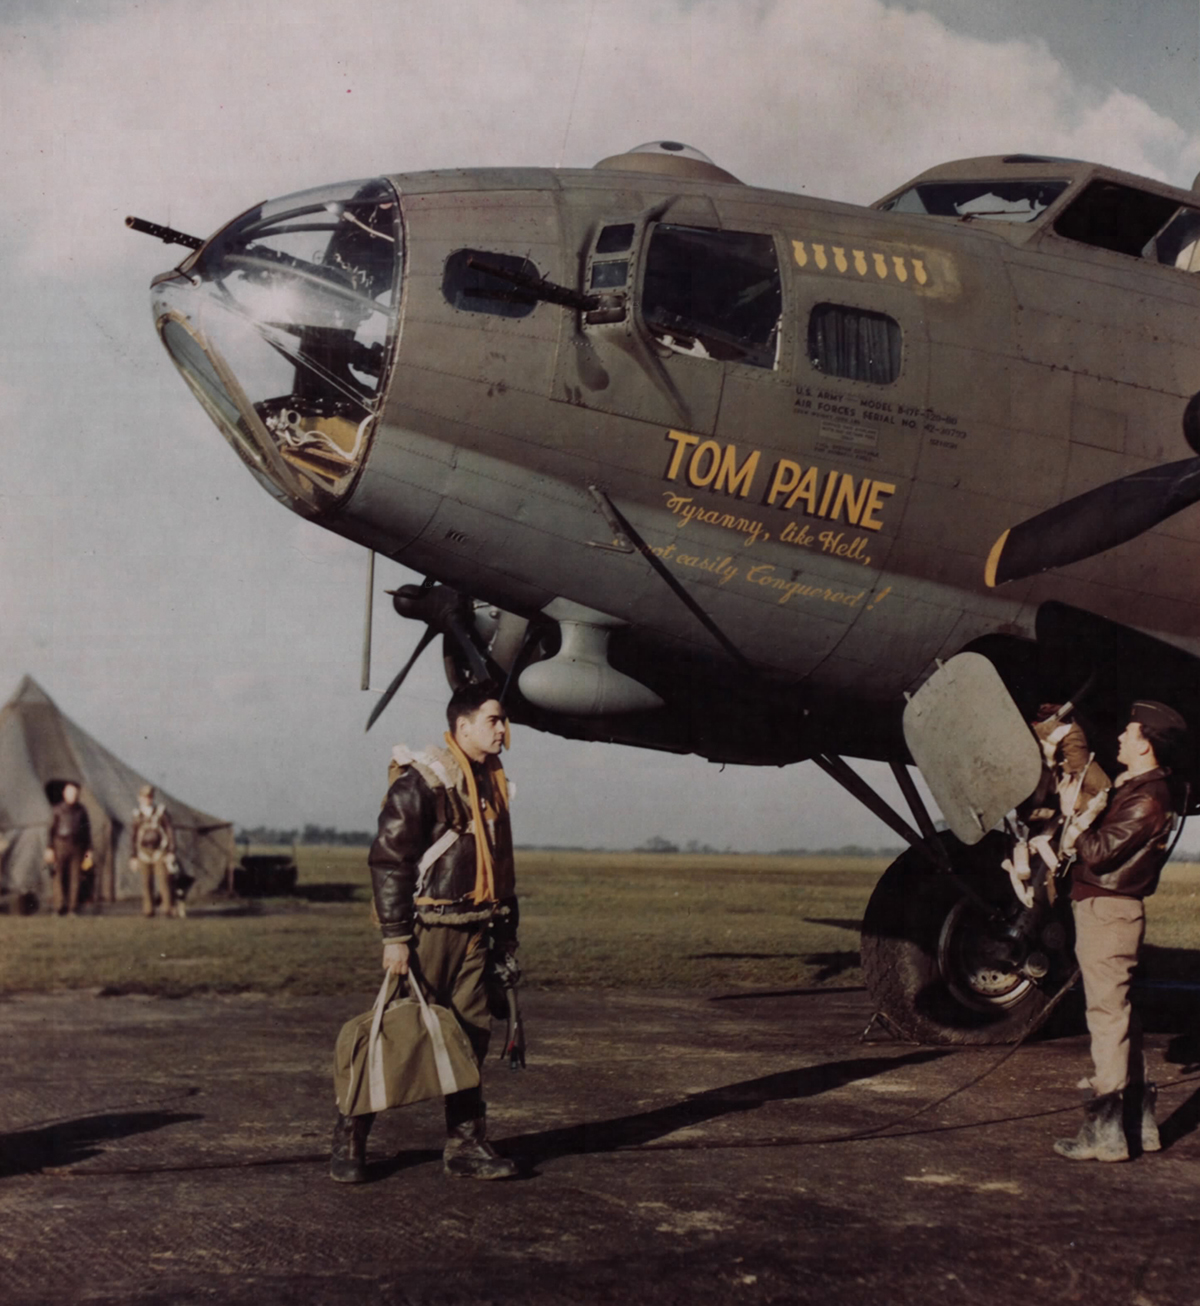 B-17 #42-30793 / Tom Paine